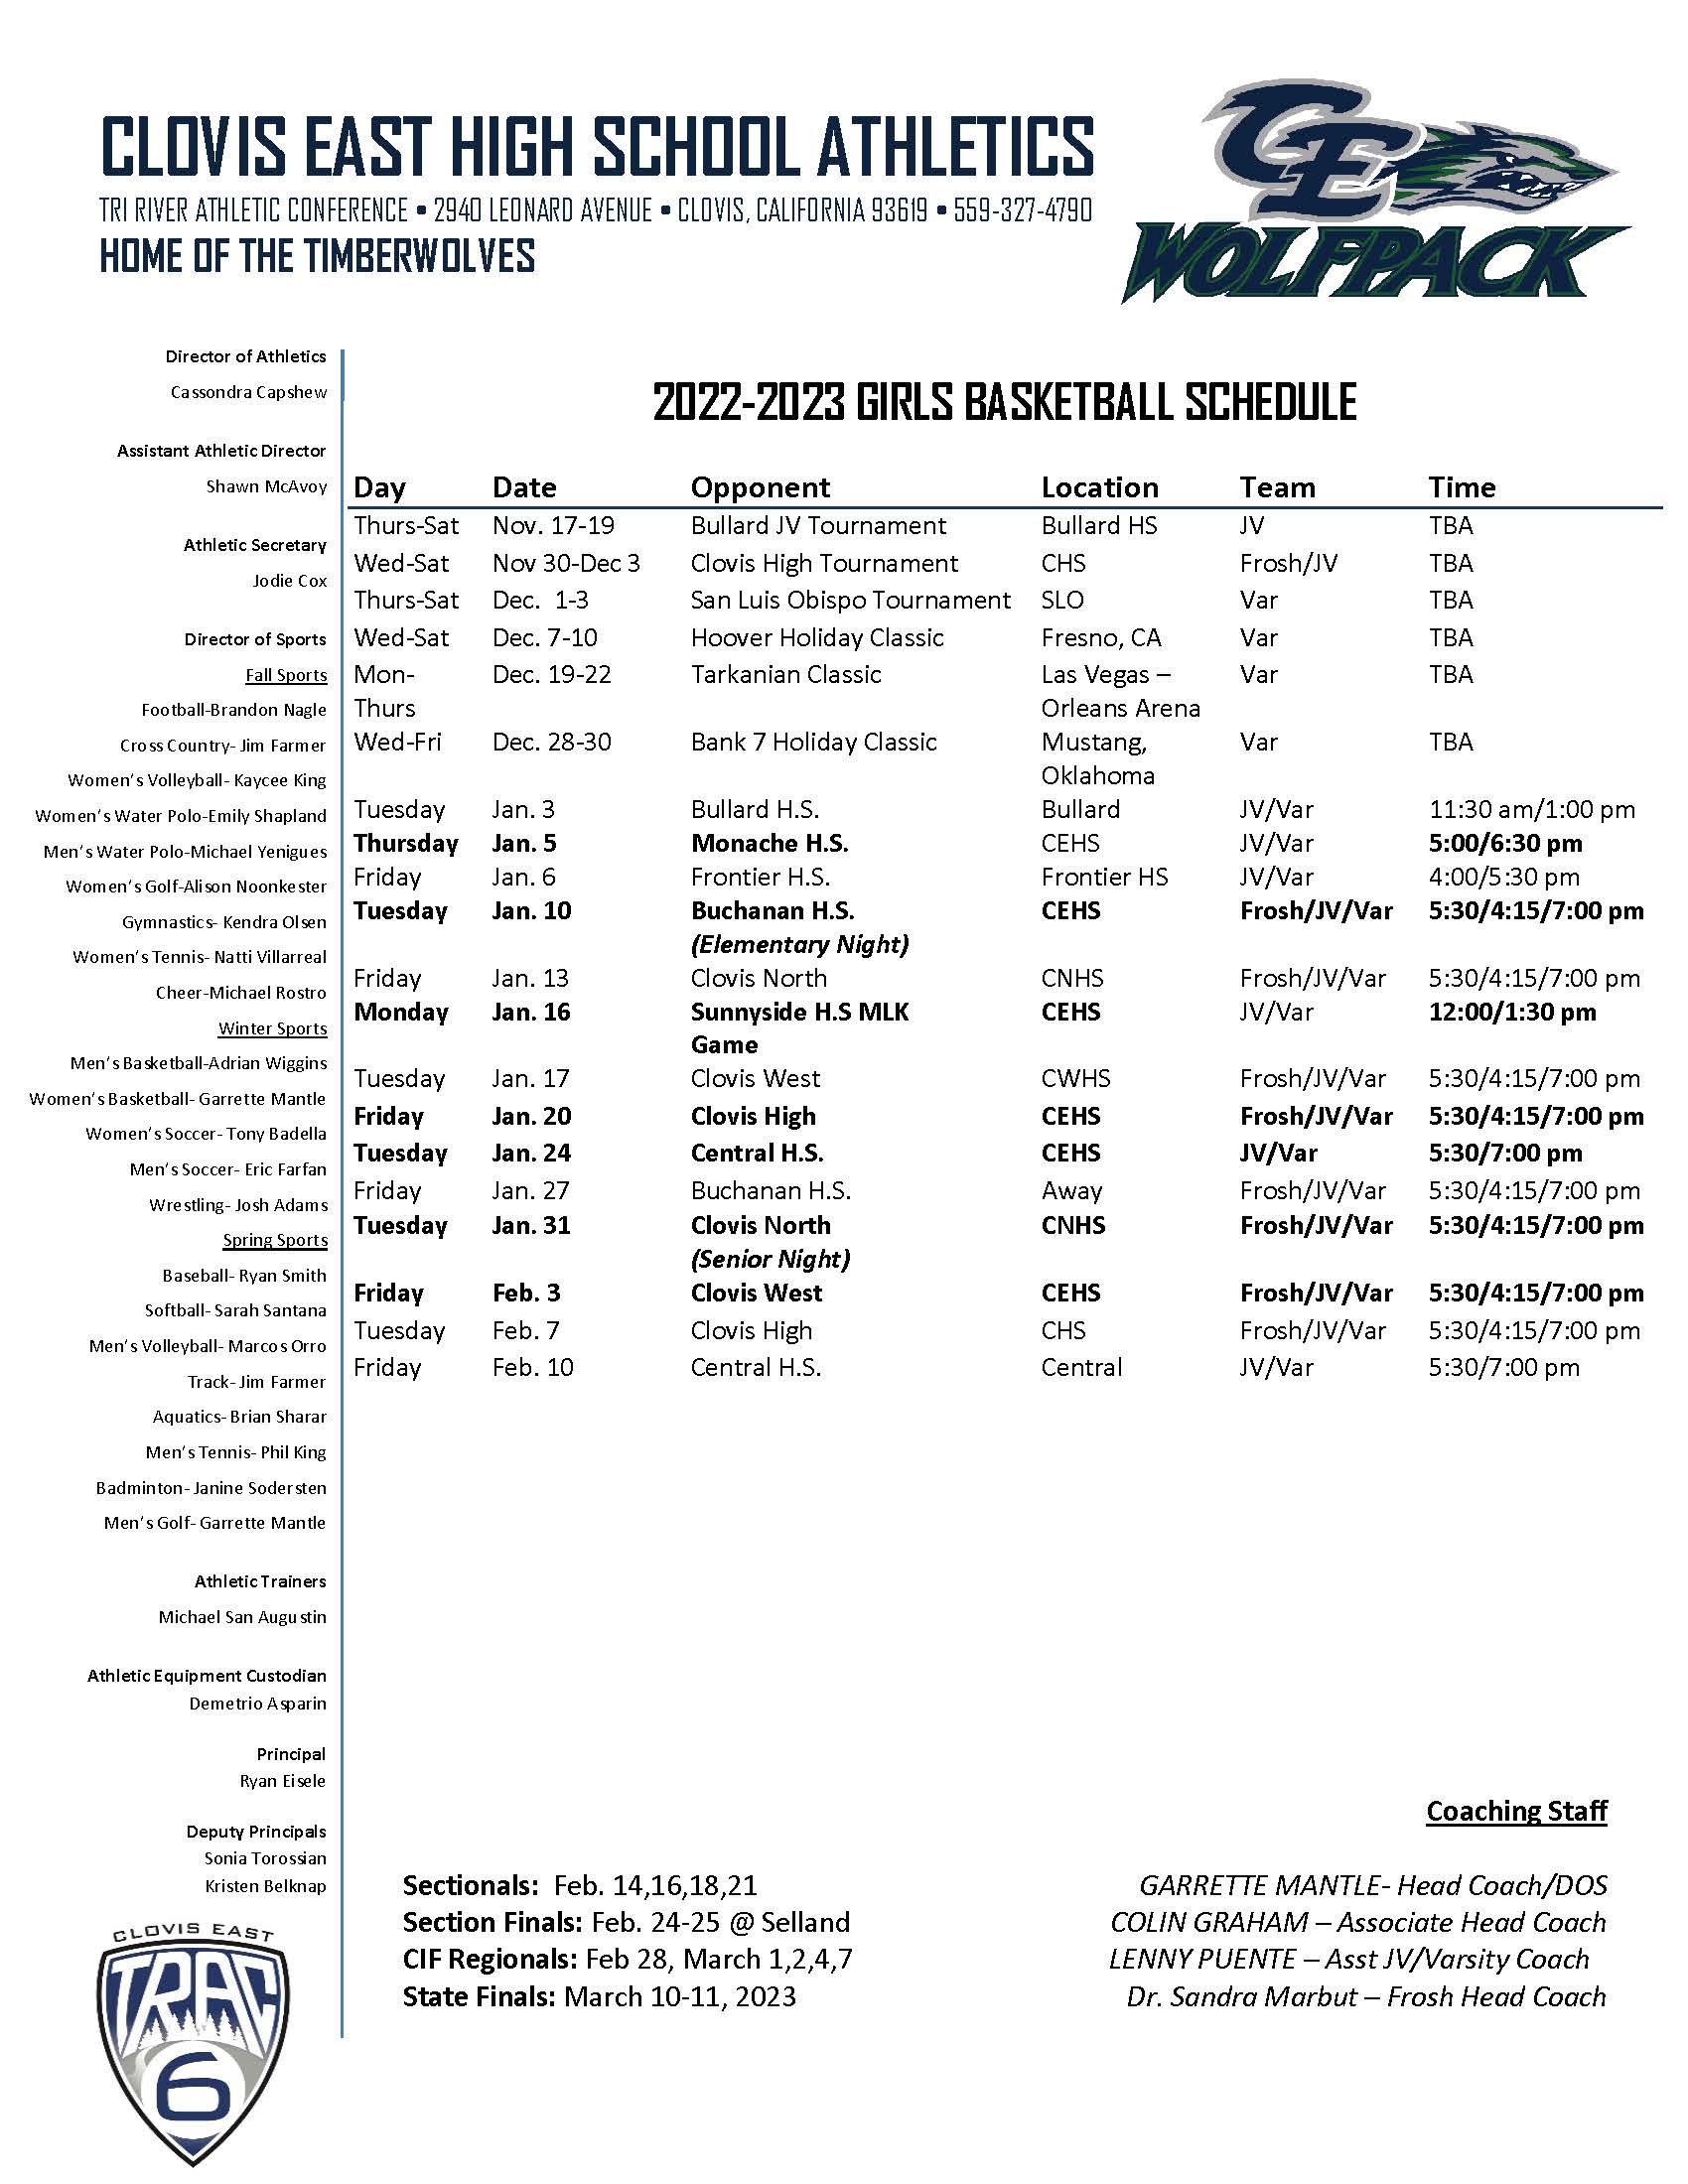 22-23 girls basketball schedule